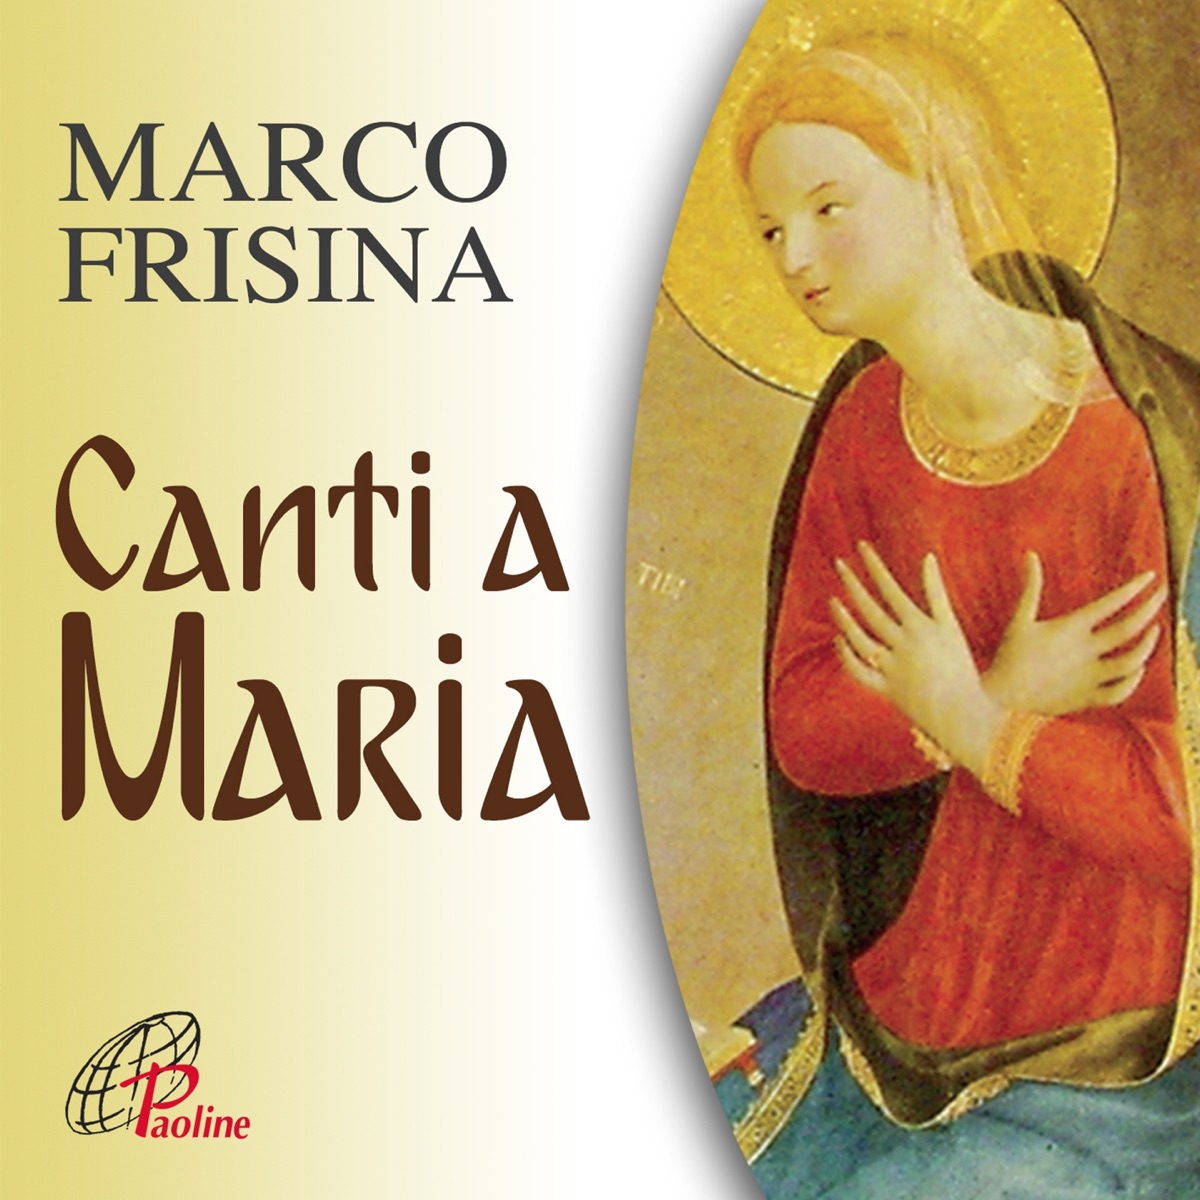 Canti a Maria di Marco Frisina su Apple Music